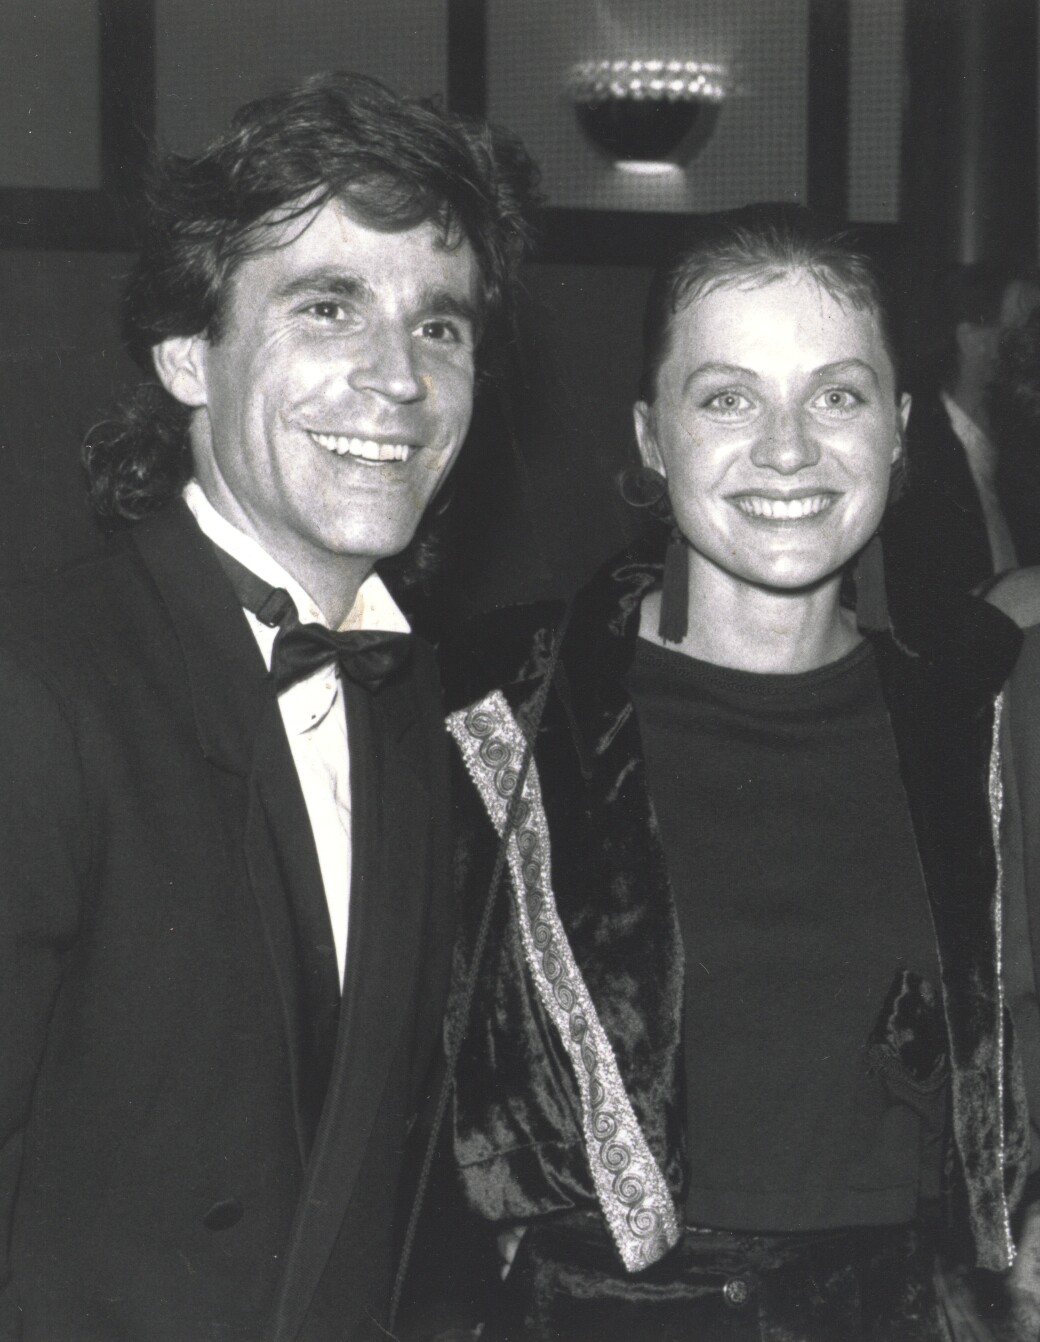 John Charles Jopson, Paris Jefferson - ARIA Awards, Sydney 1988